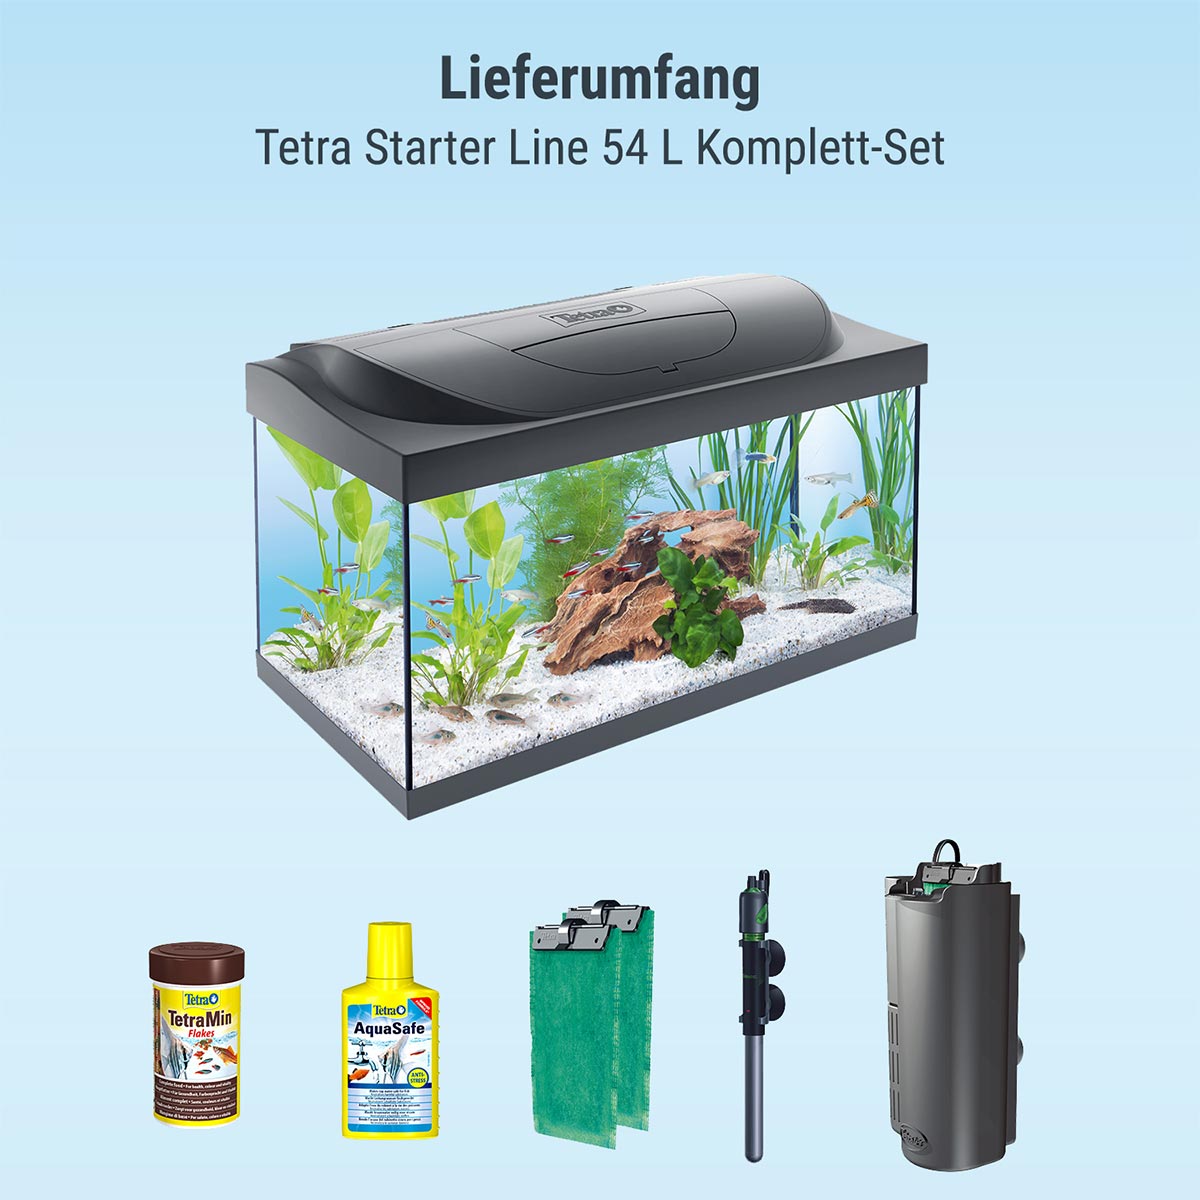 Tetra Starter Line LED akvárium o objemu 54 l